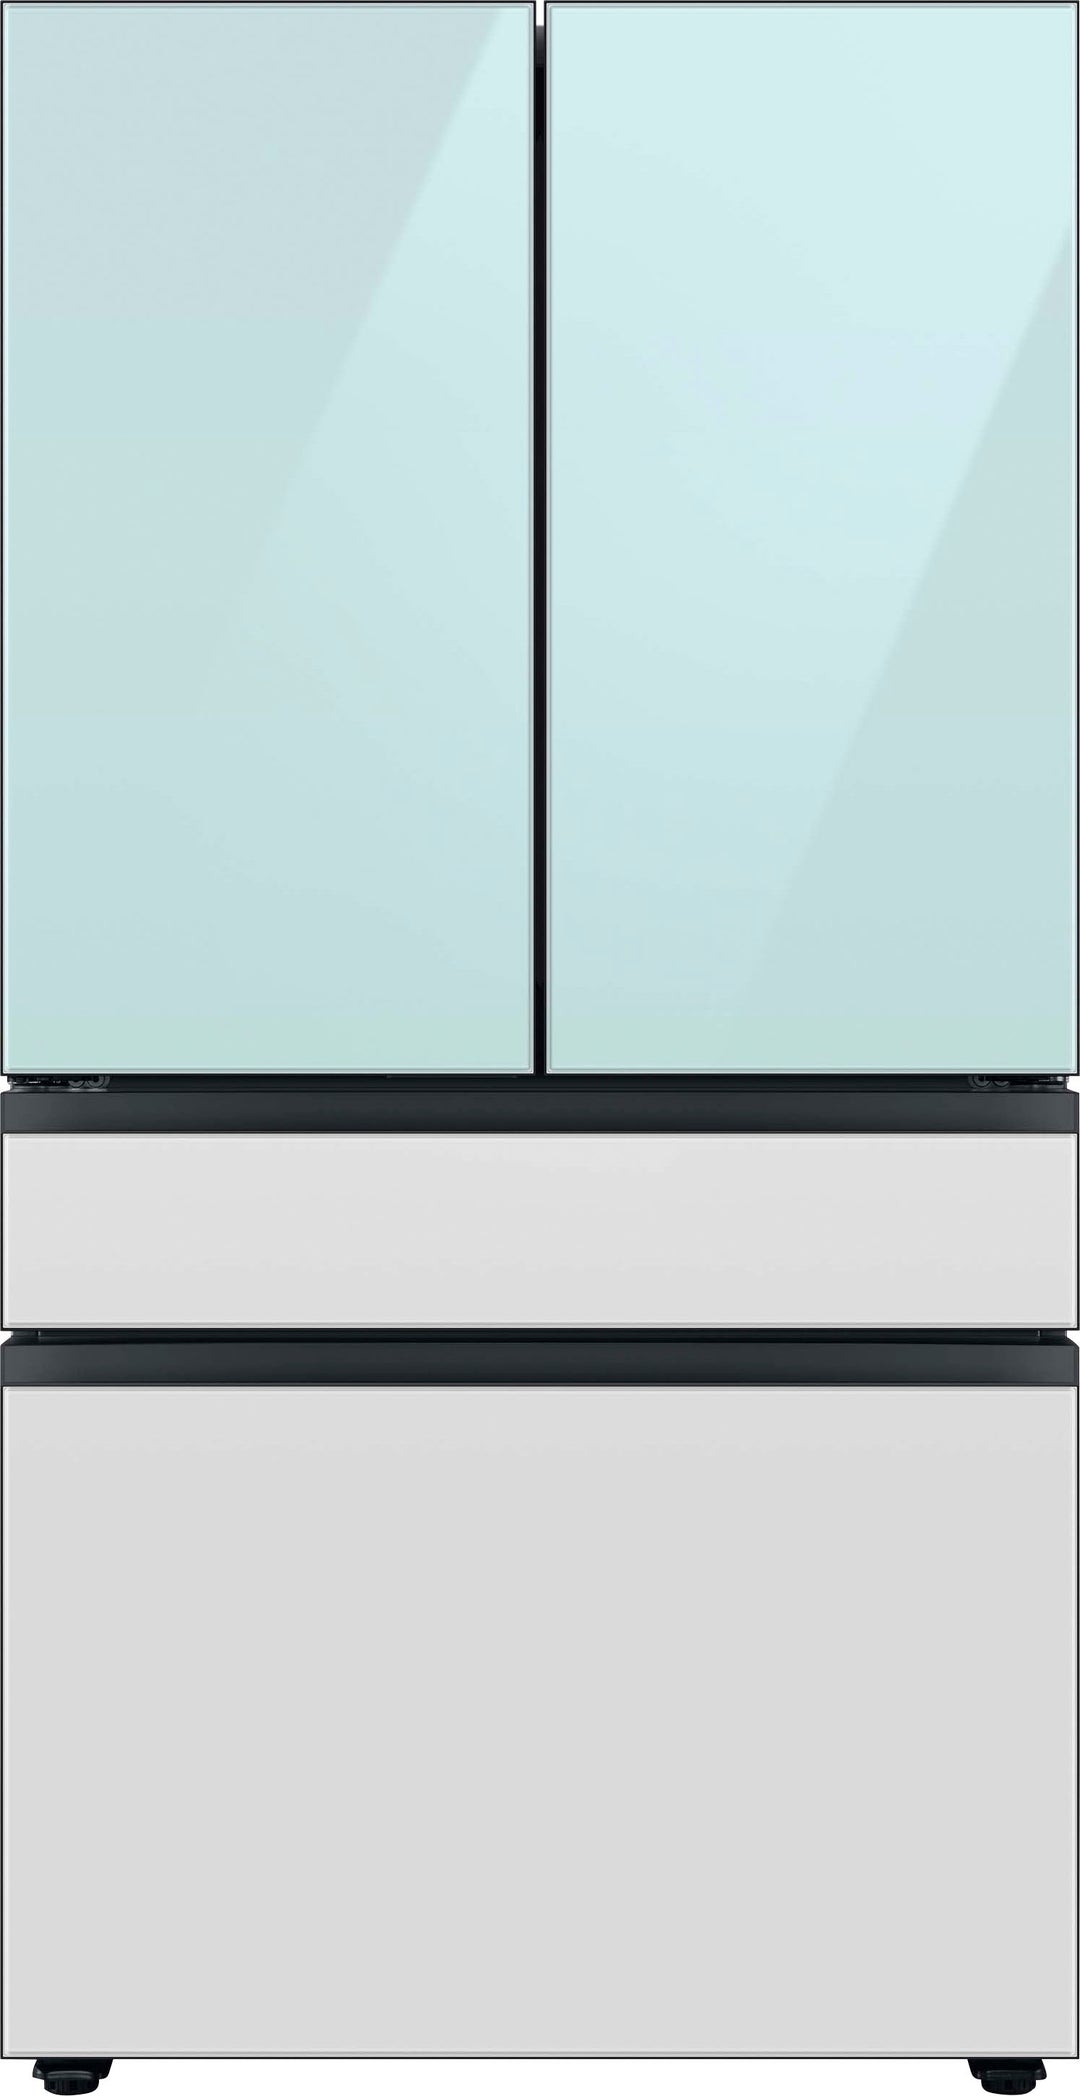 Samsung - Open Box BESPOKE 29 cu. ft 4-Door French Door Refrigerator with Beverage Center - Morning Blue Glass_0